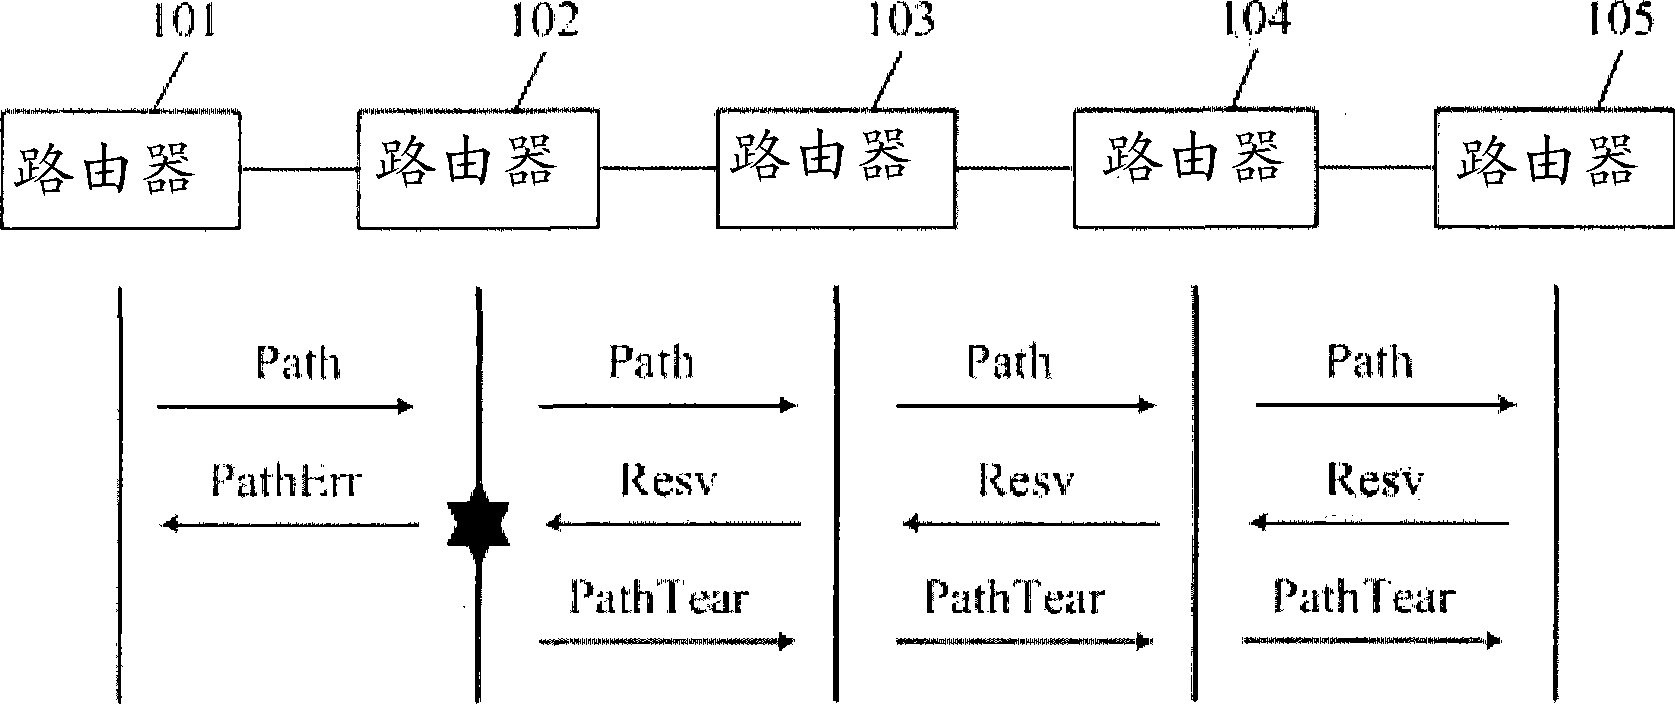 Tree shaped fast connection establishing method based on multi-Agent cooperation